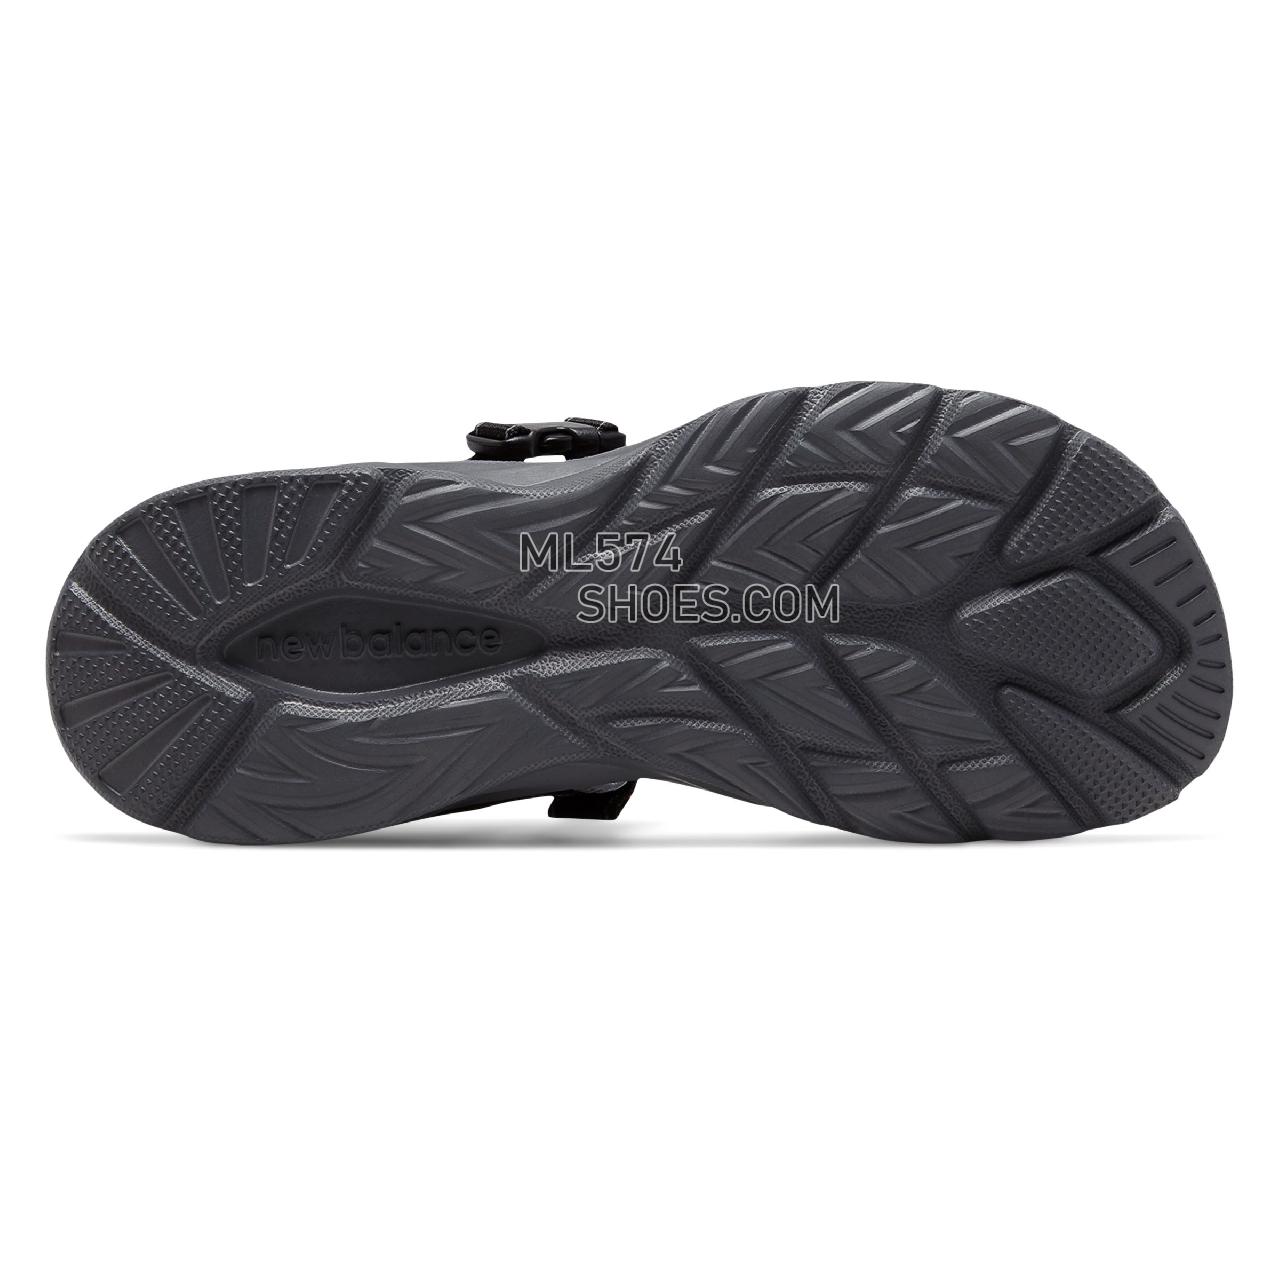 New Balance Response Sandal - Men's 2067 - Sandals Black with Grey - M2067BGR